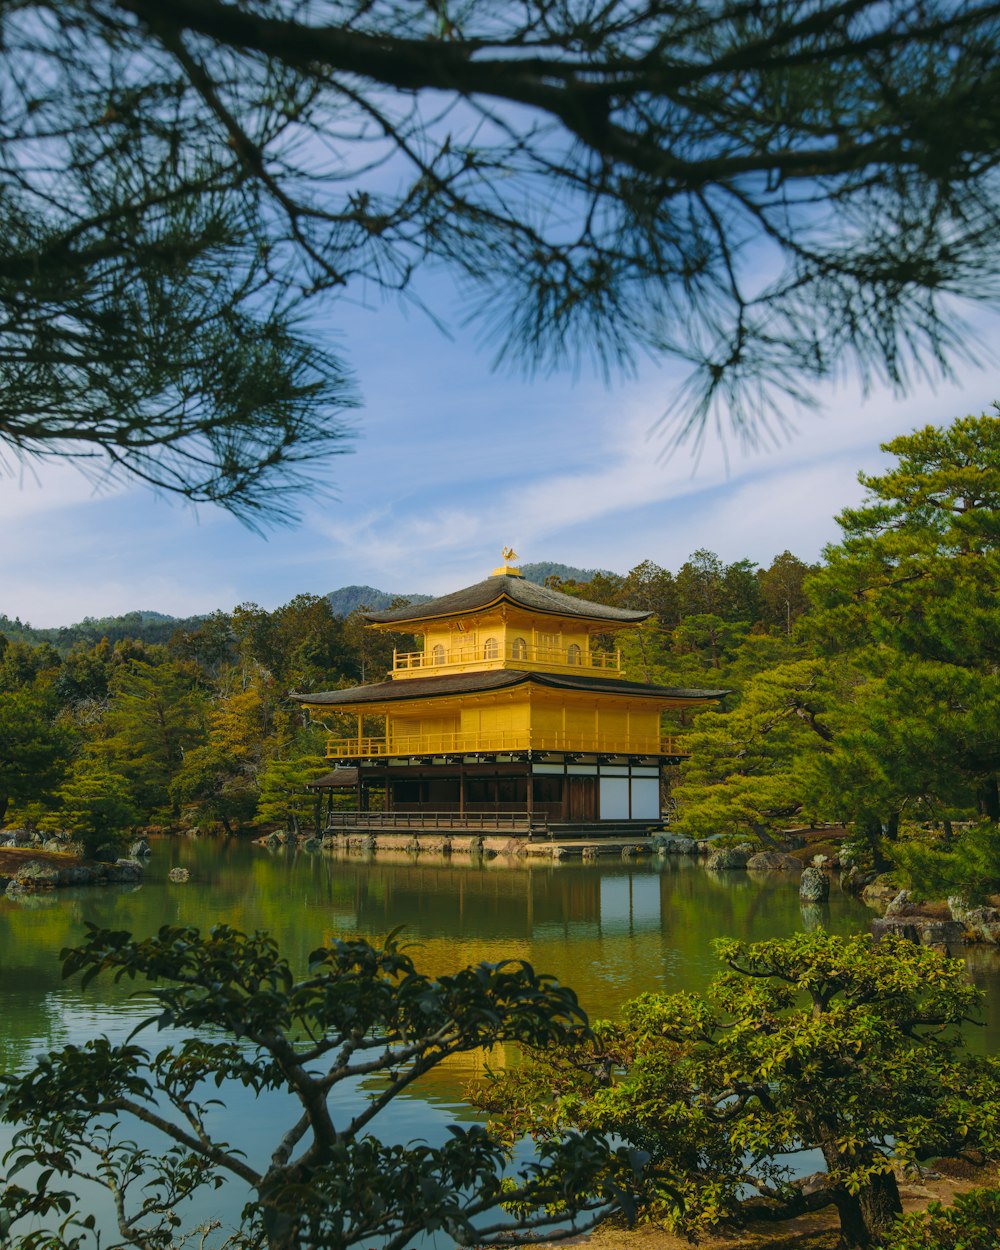 Kinkaku-ji with a pond in front of it